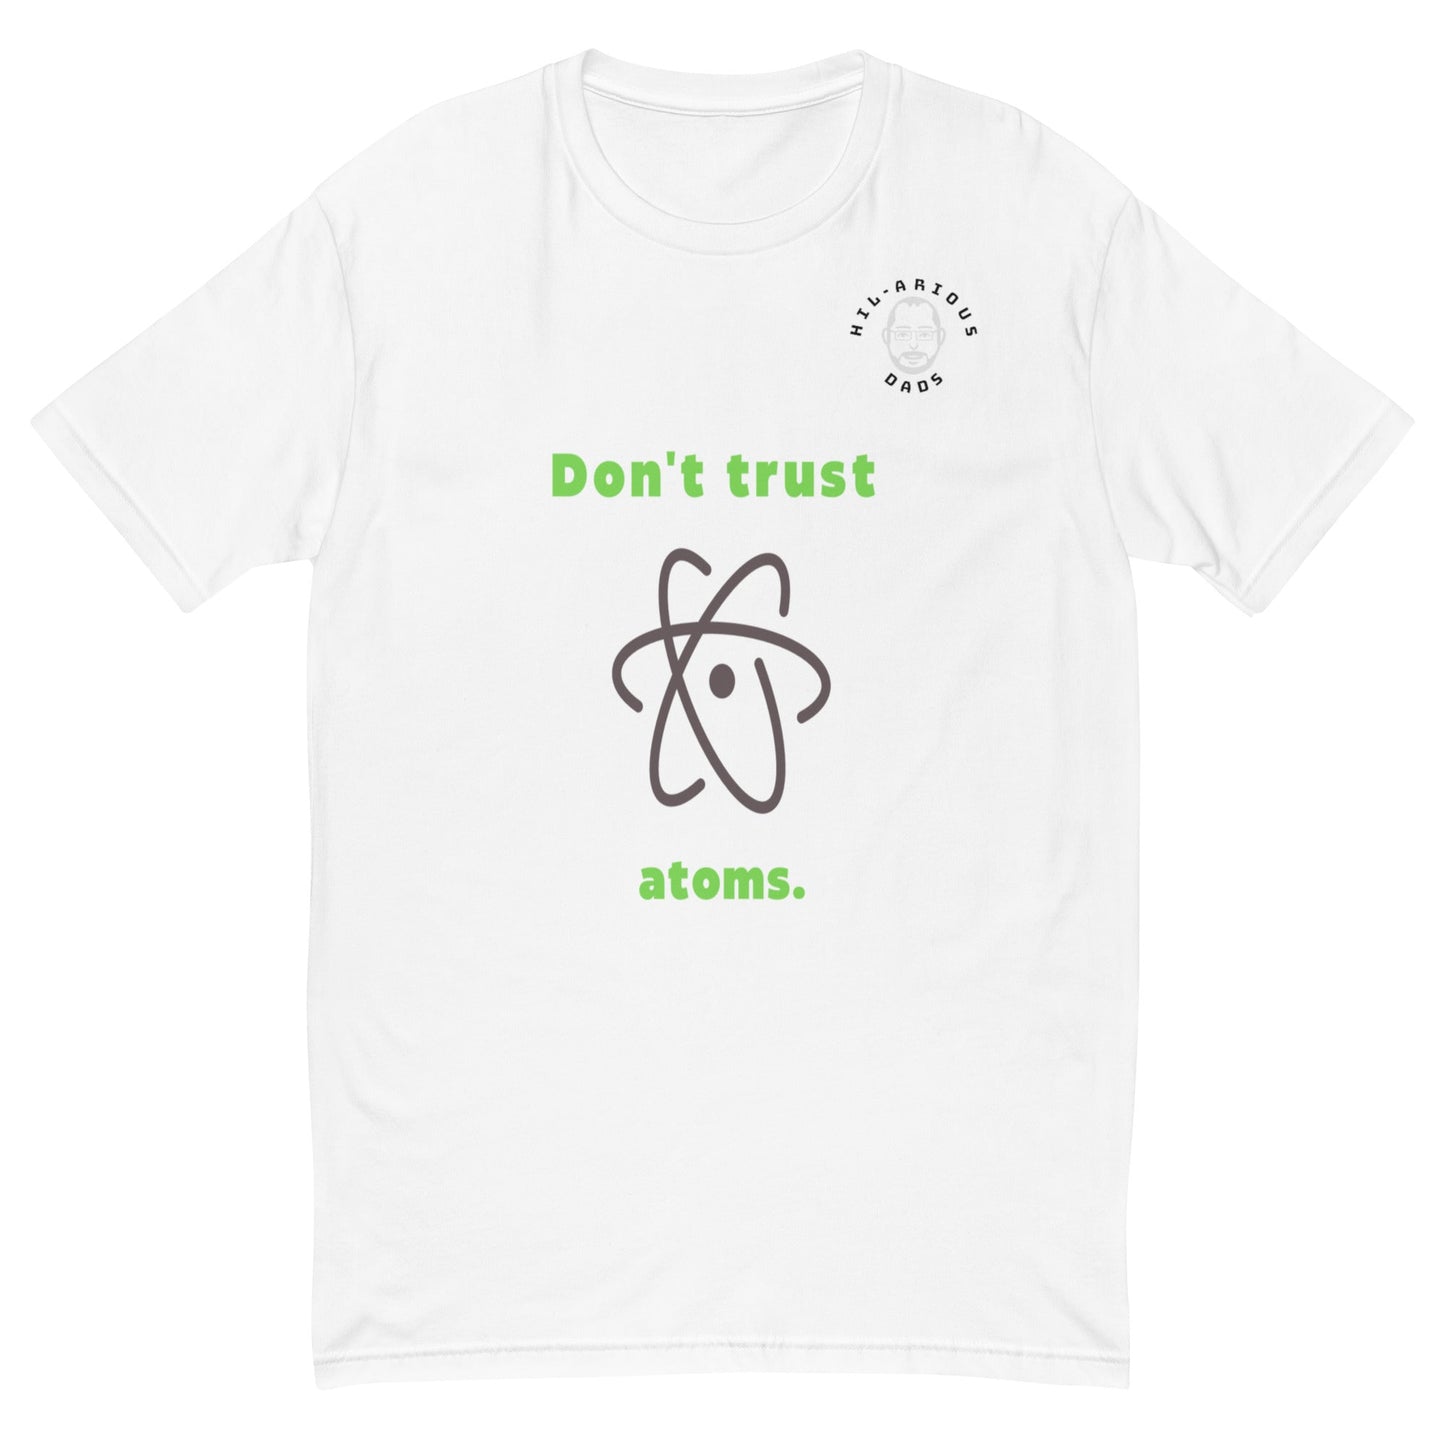 Don't trust atoms-T-shirt - Hil-arious Dads